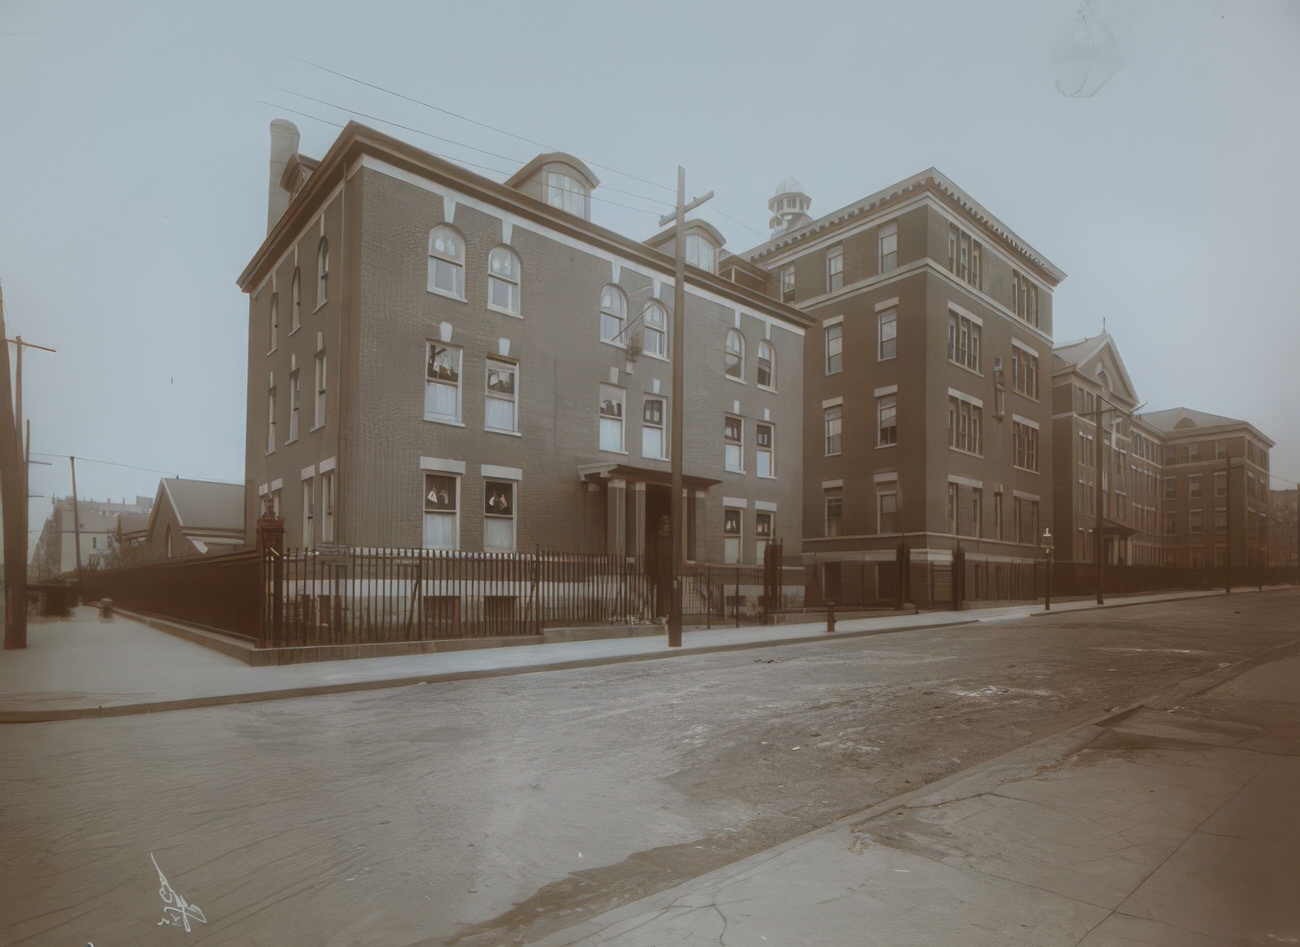 St. Francis Hospital, Circa 1905.